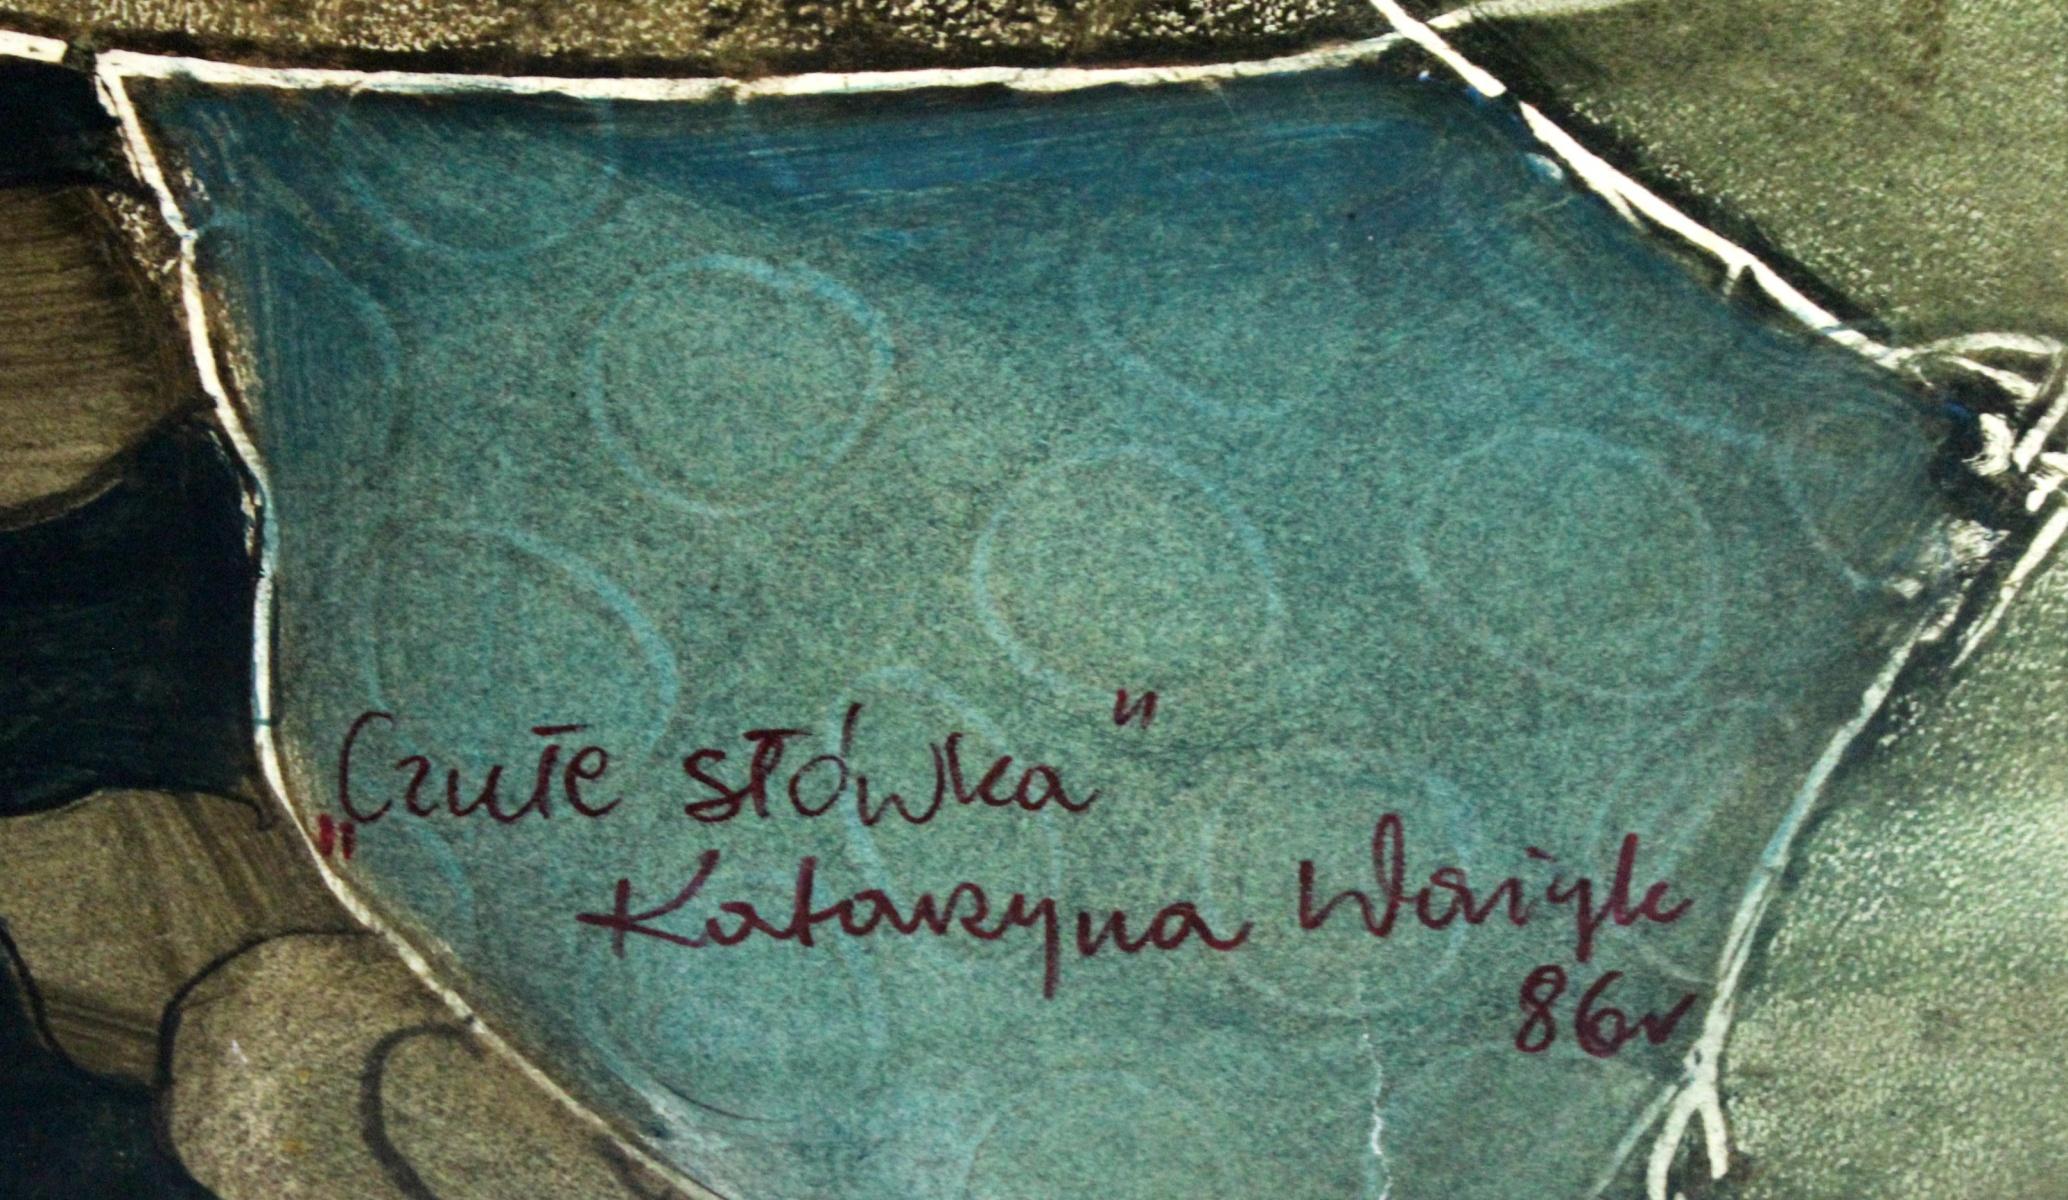 mots dix-huit - XXe siècle, peinture figurative de supports mélangés, nu, couple - Art de Katarzyna Wazyk